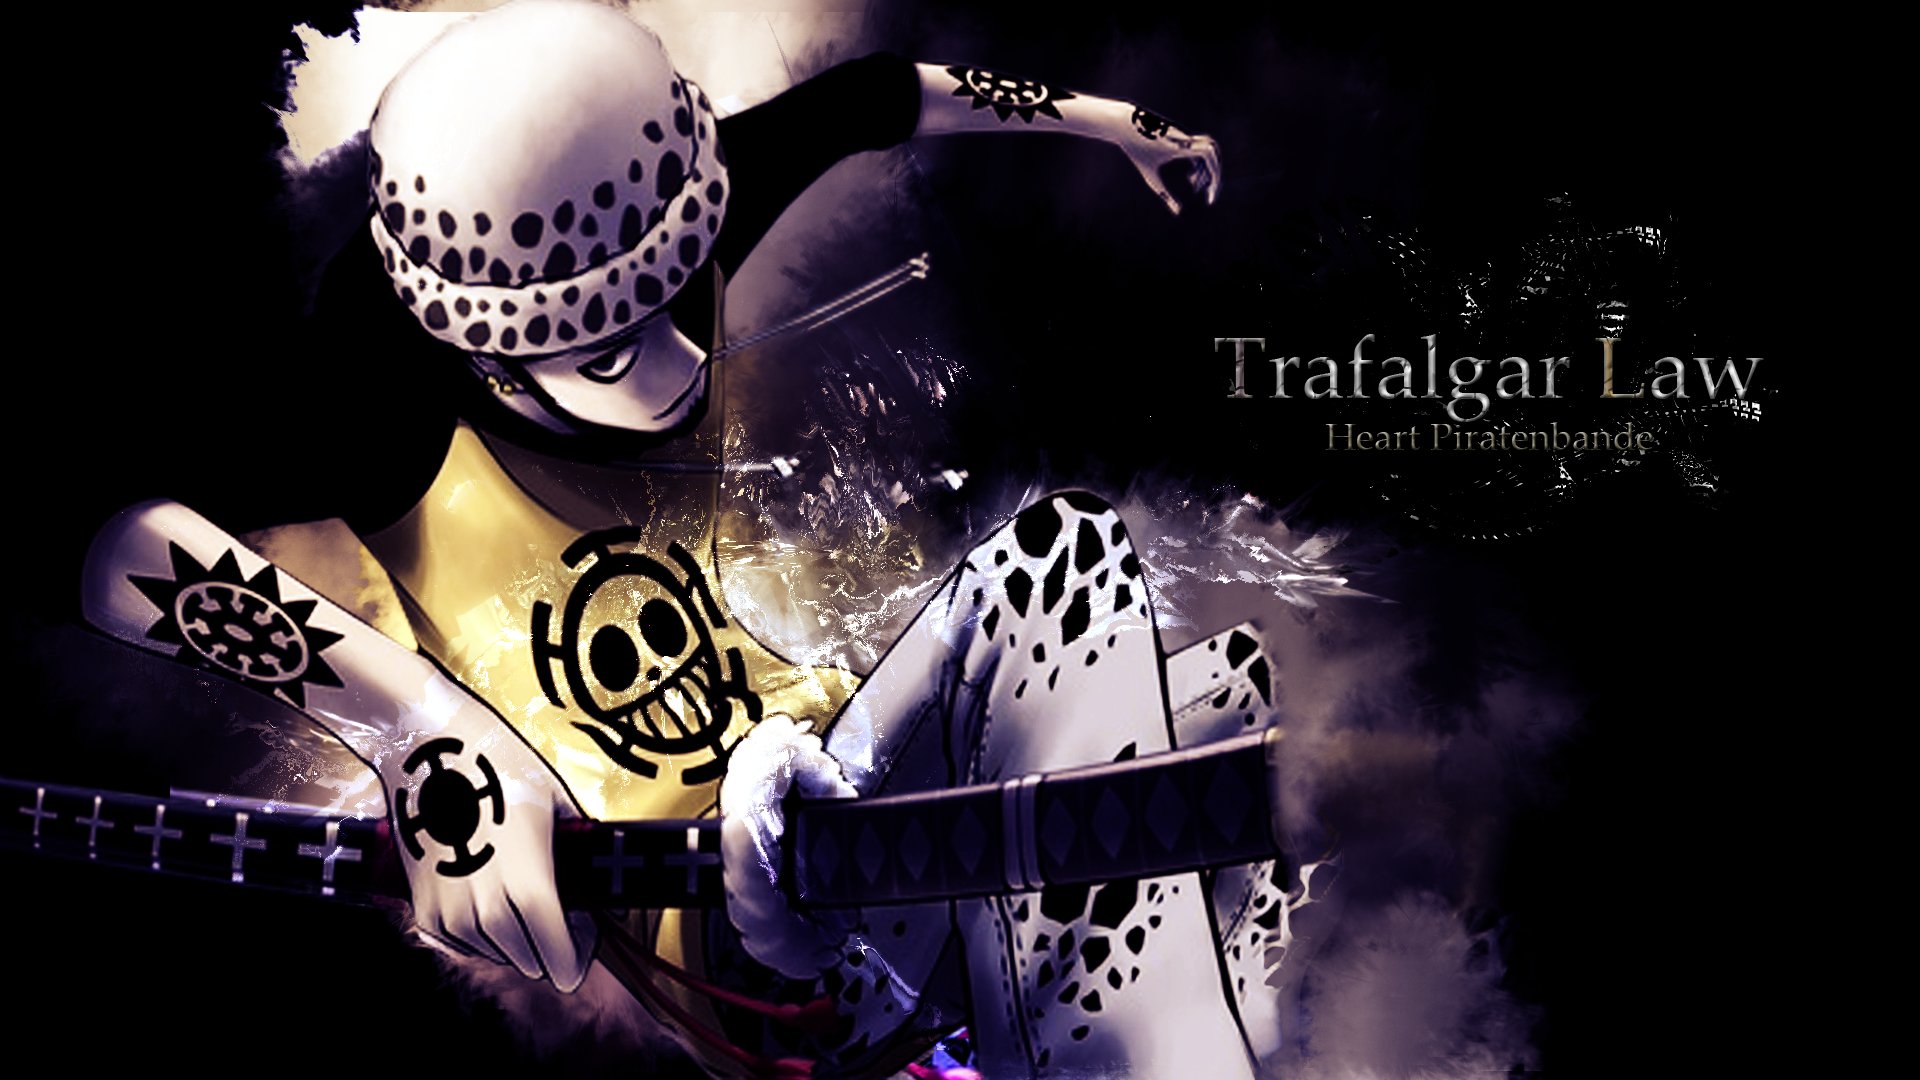 Trafalgar Law HD Wallpaper Background Image